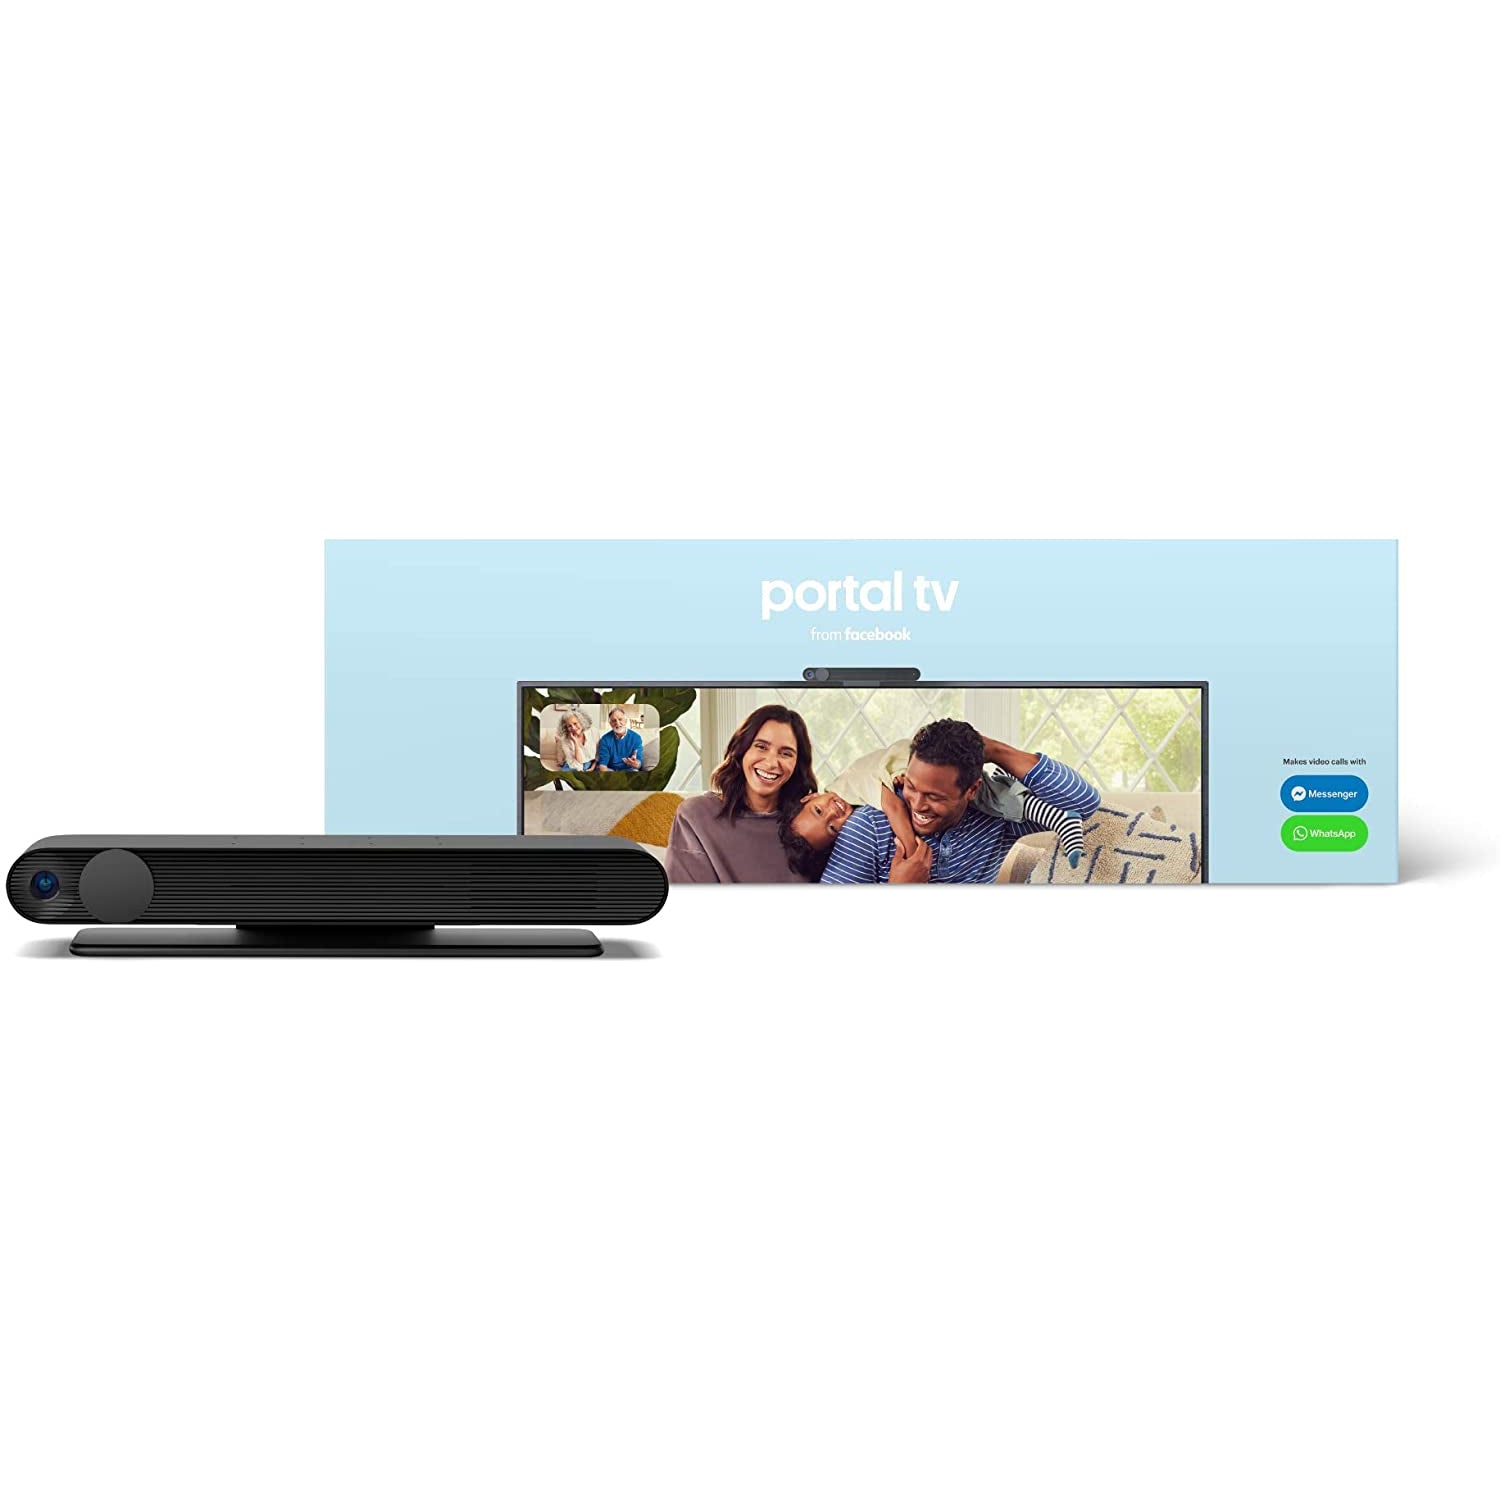 Portal TV from Facebook Smart Video Calling Camera - Black - New